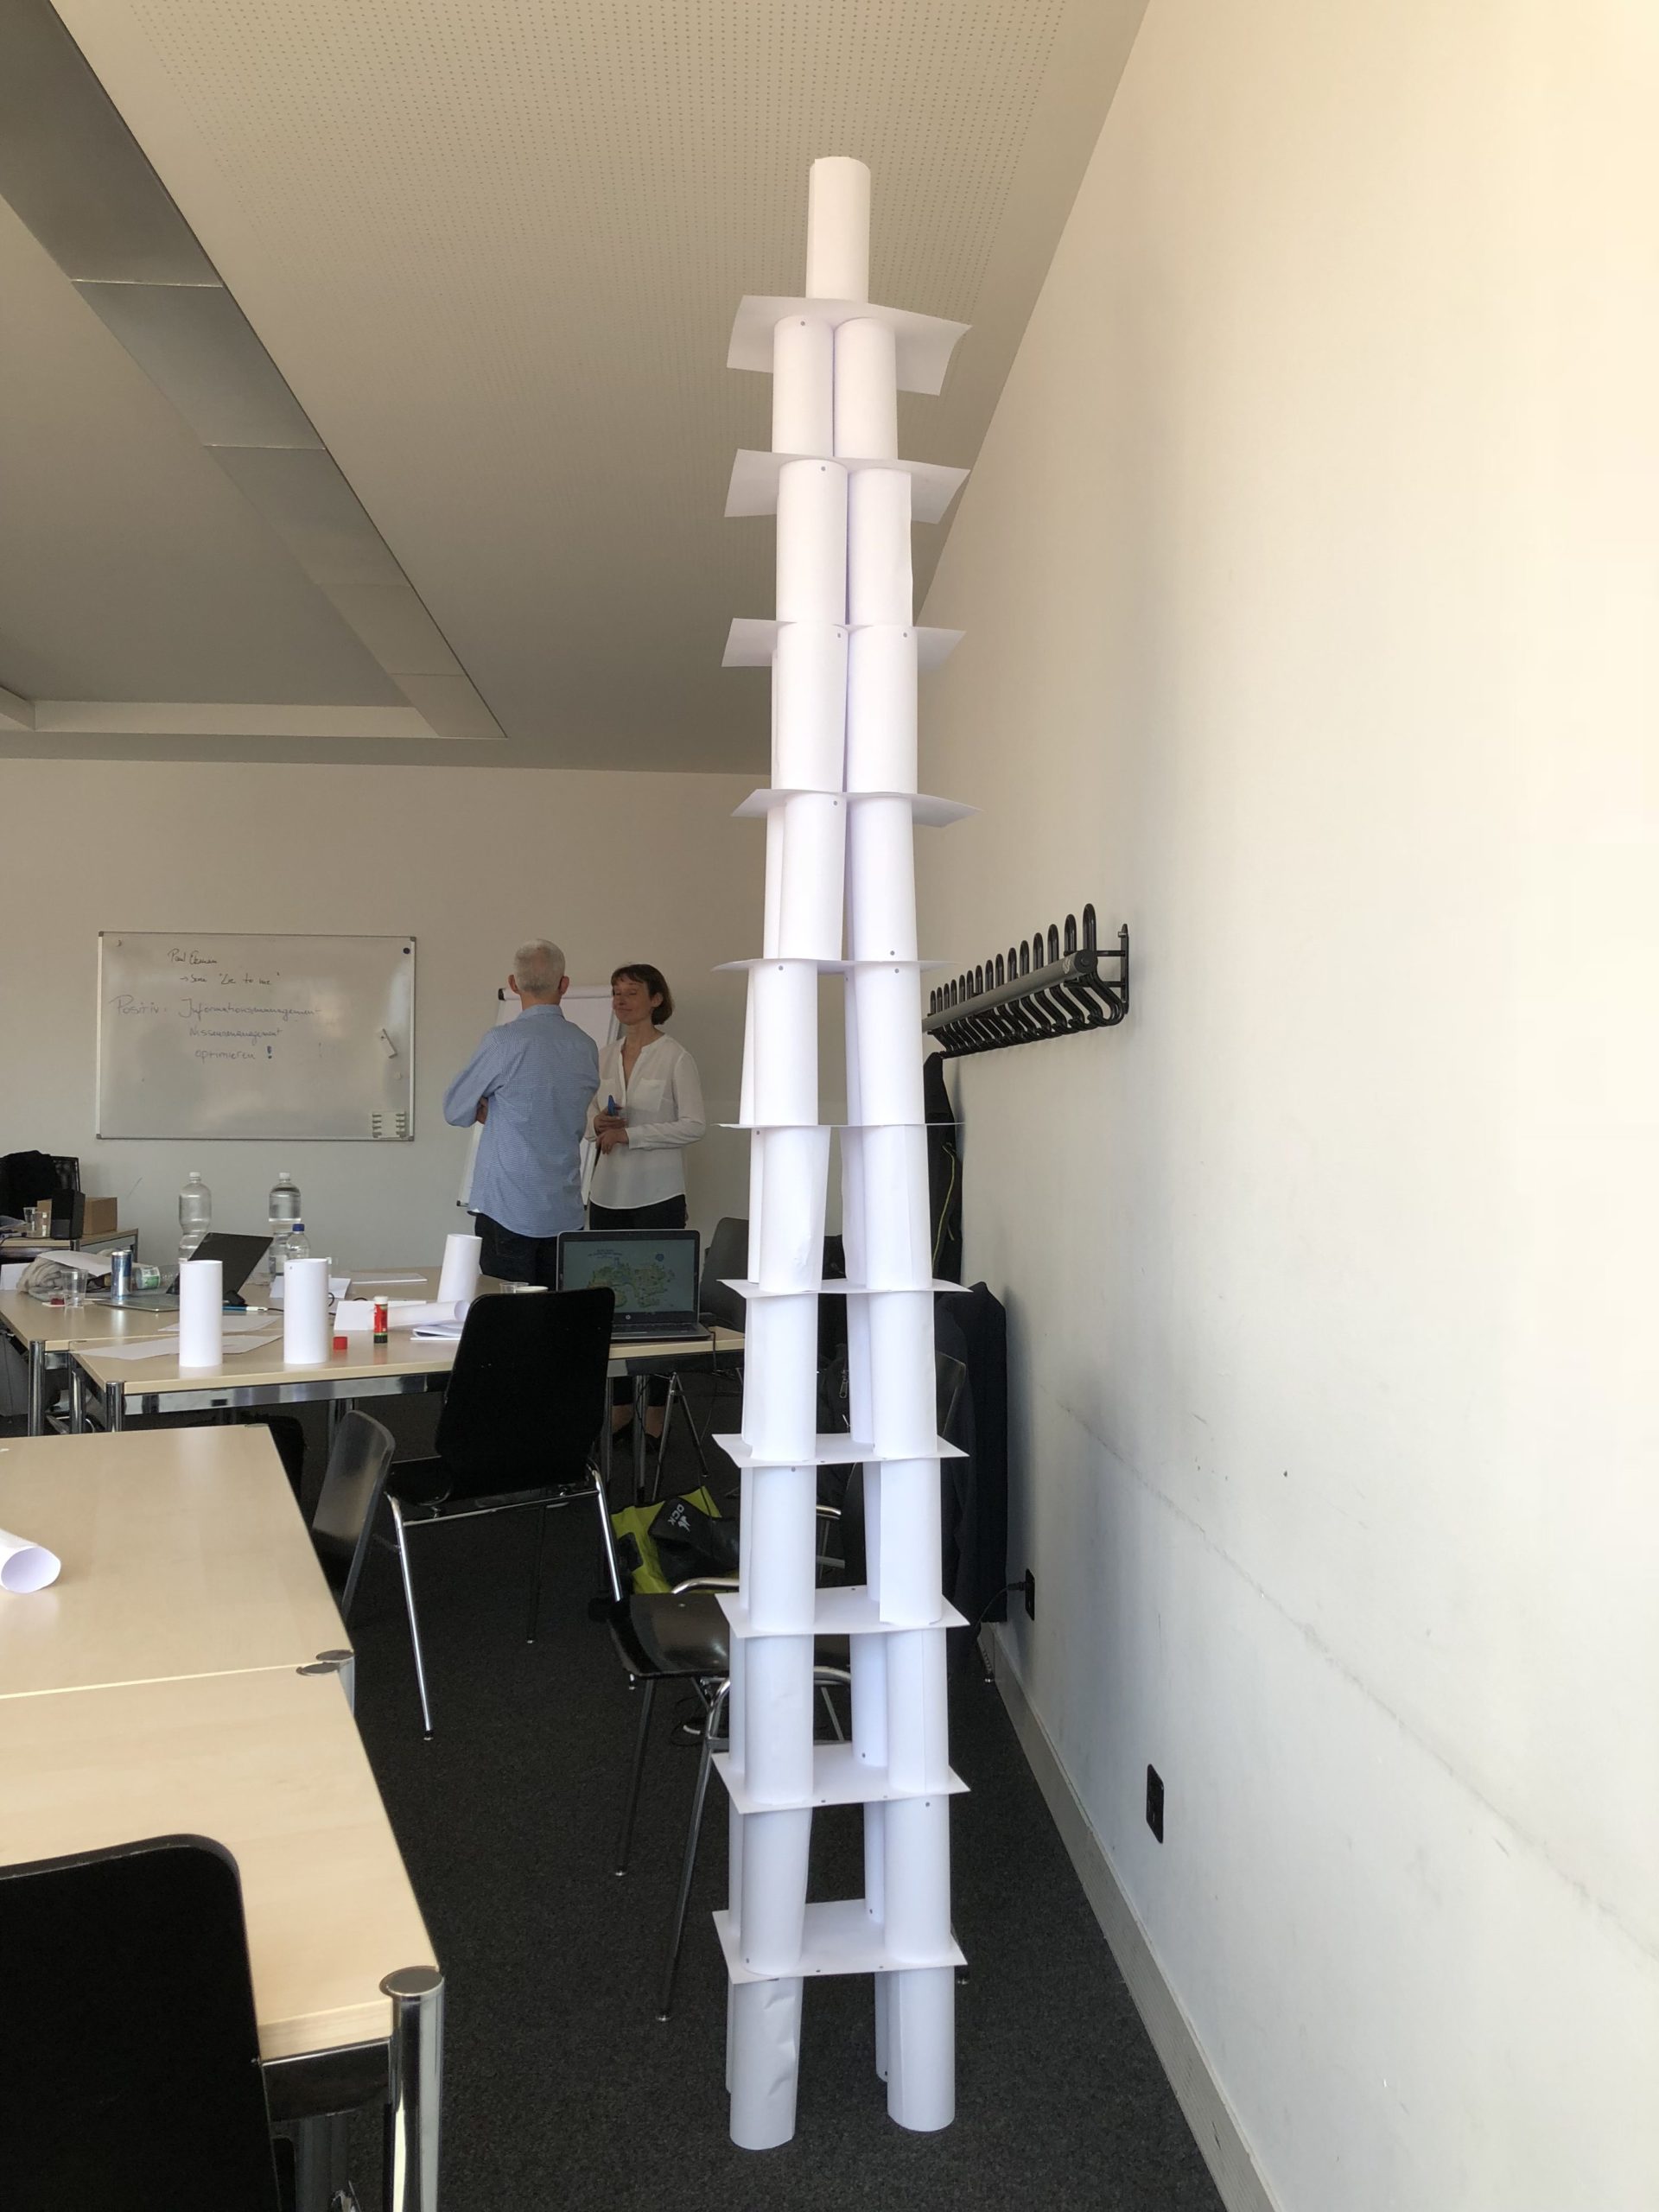 Turm workshop Leadership stabil